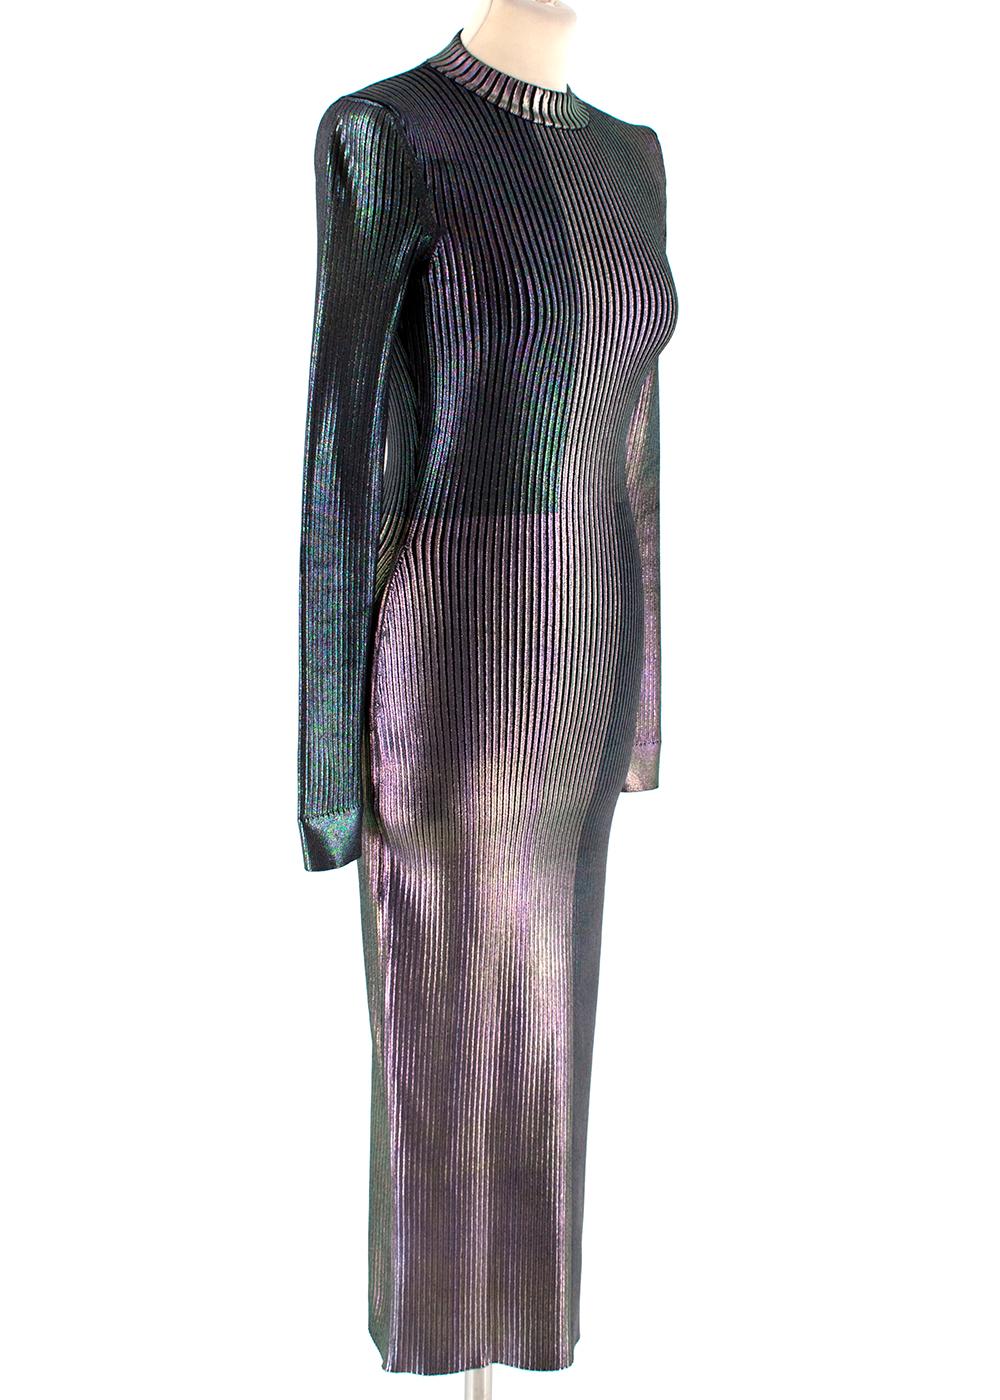 Christopher Kane Metallic Ribbed Knit Midi Dress - Size XS 5